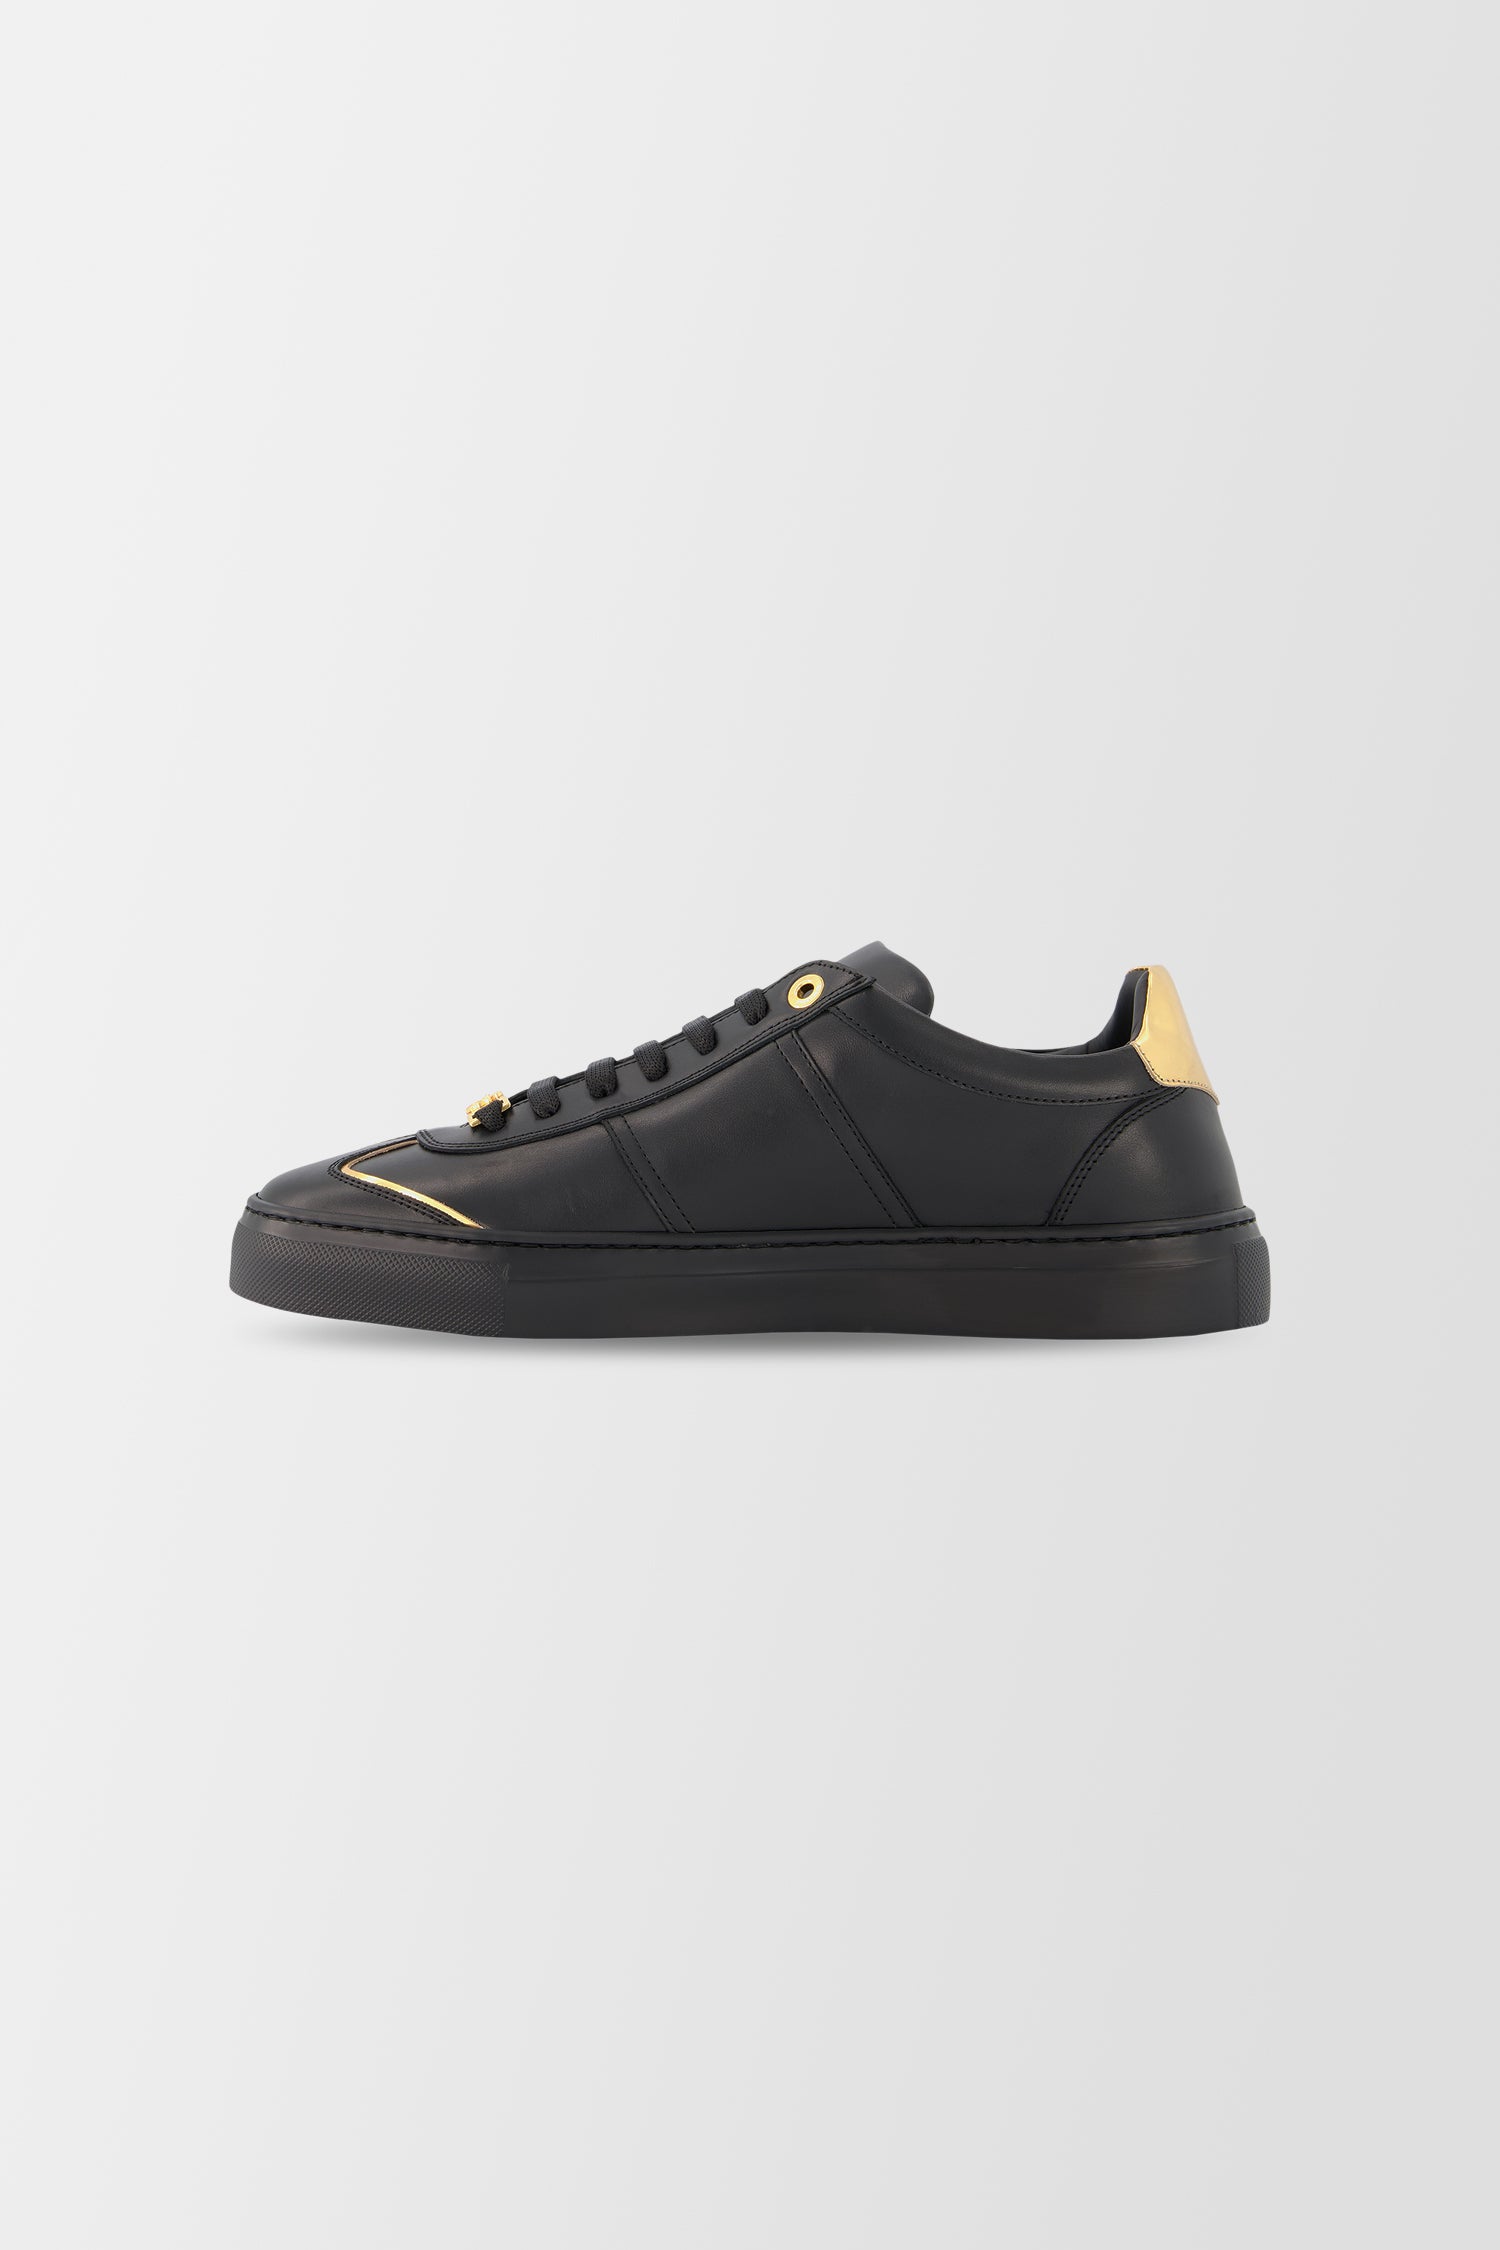 Billionaire Black/Gold Sneakers